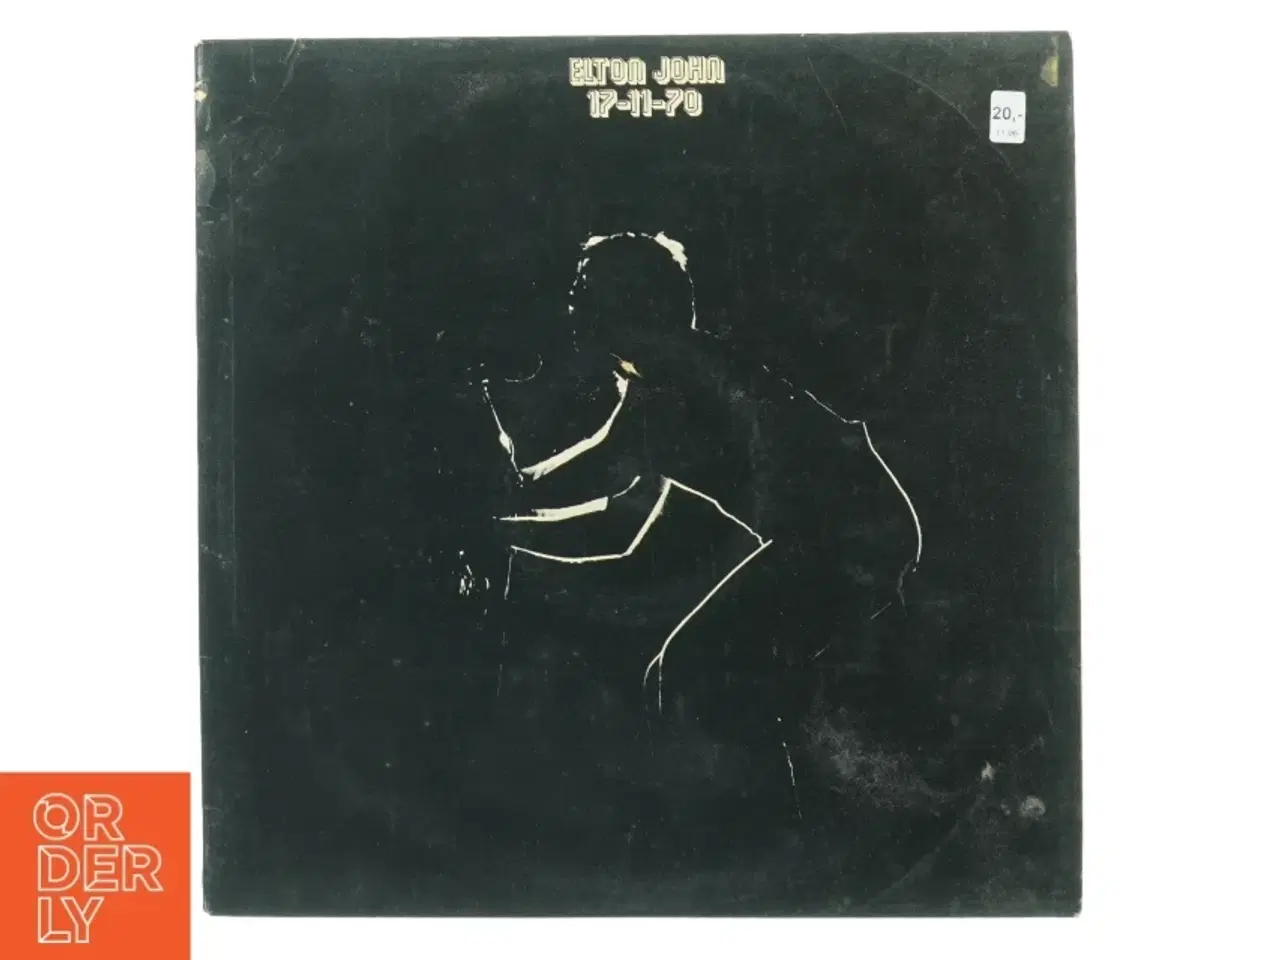 Billede 1 - Elton John 17-11-70 Vinyl LP (str. 31 x 31 cm)